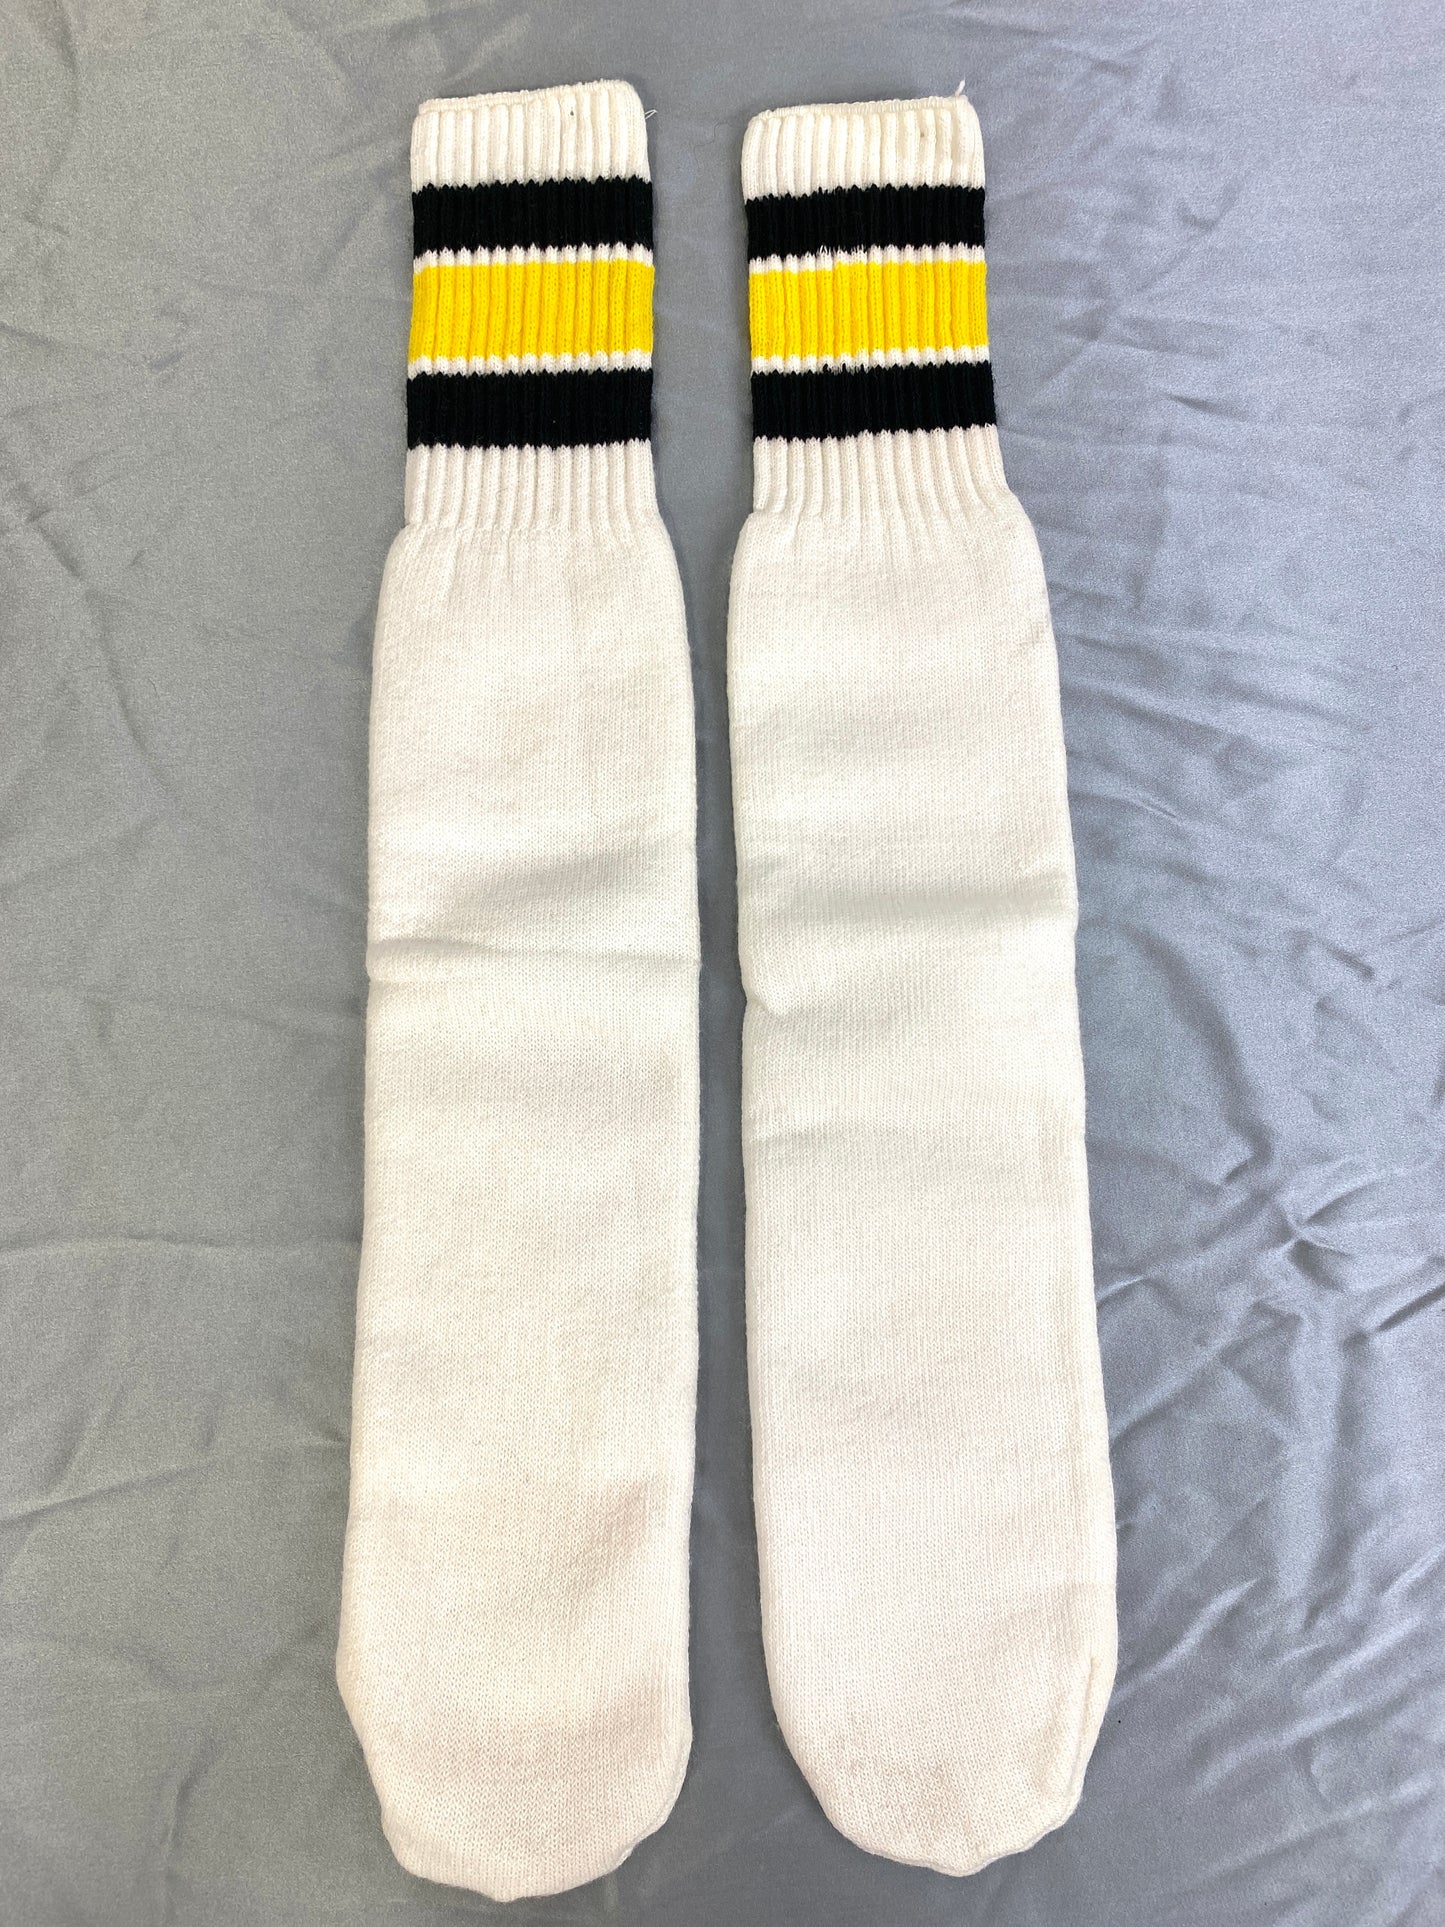 Vintage Deadstock White Cotton Tube Socks with Yellow & Black Stripes, Sports/ Gym, x2 Pair